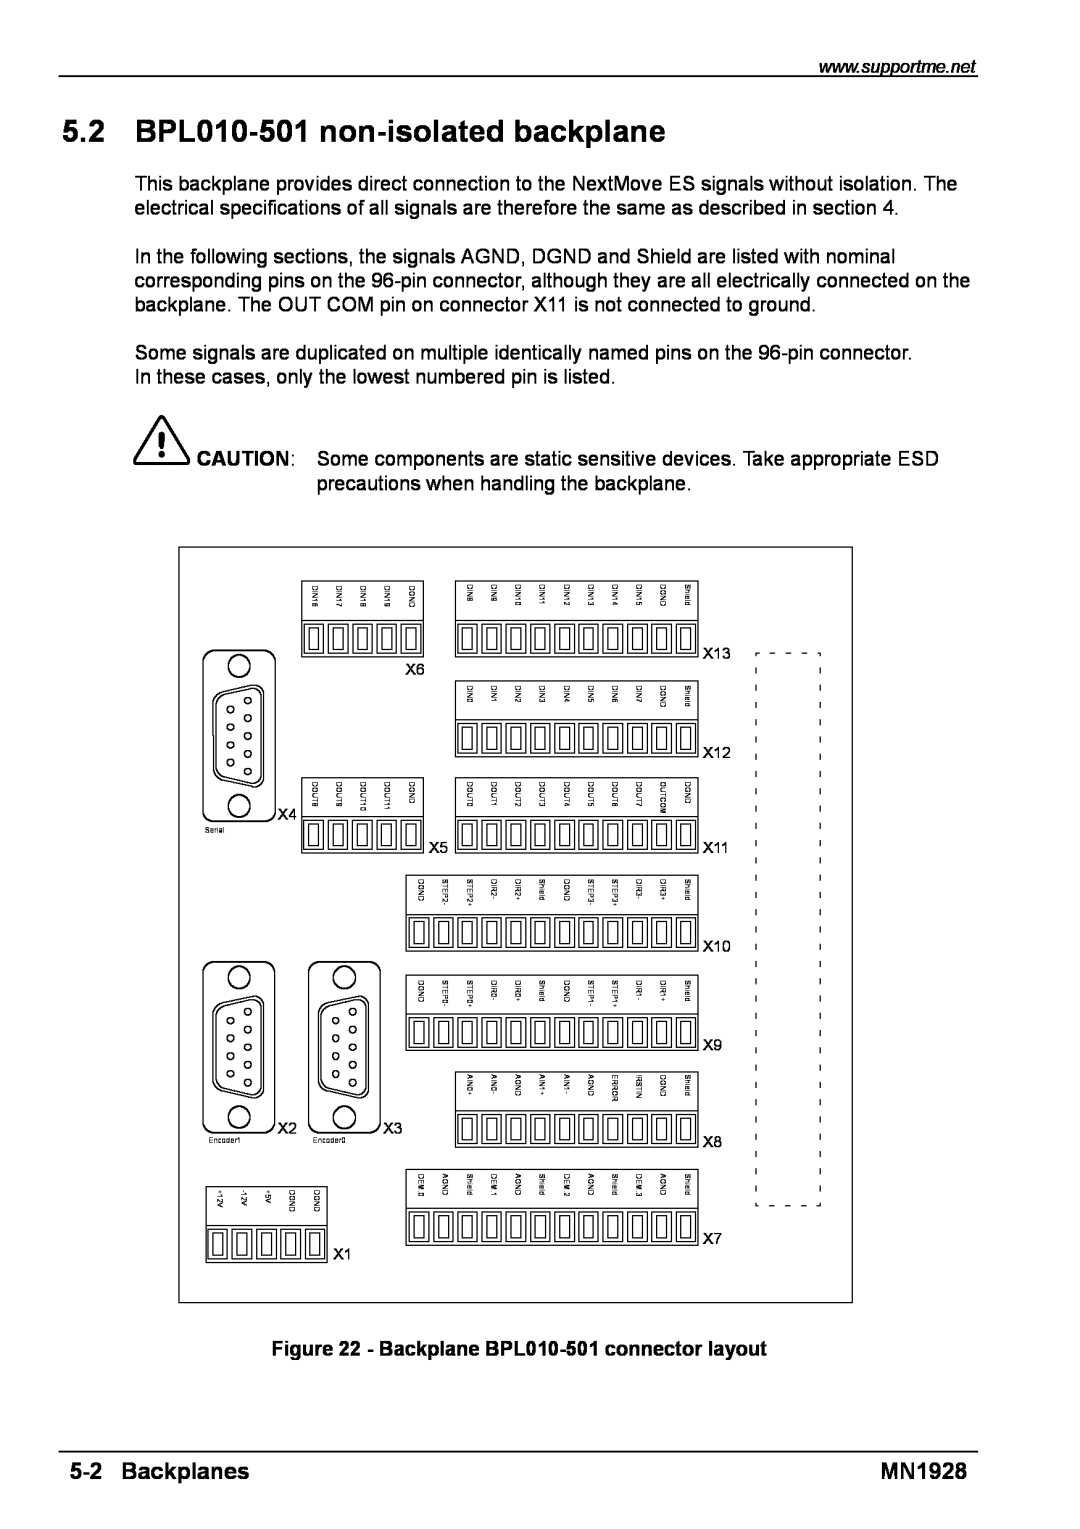 Baldor MN1928 installation manual 5.2 BPL010-501 non-isolated backplane, Backplanes, Backplane BPL010-501 connector layout 